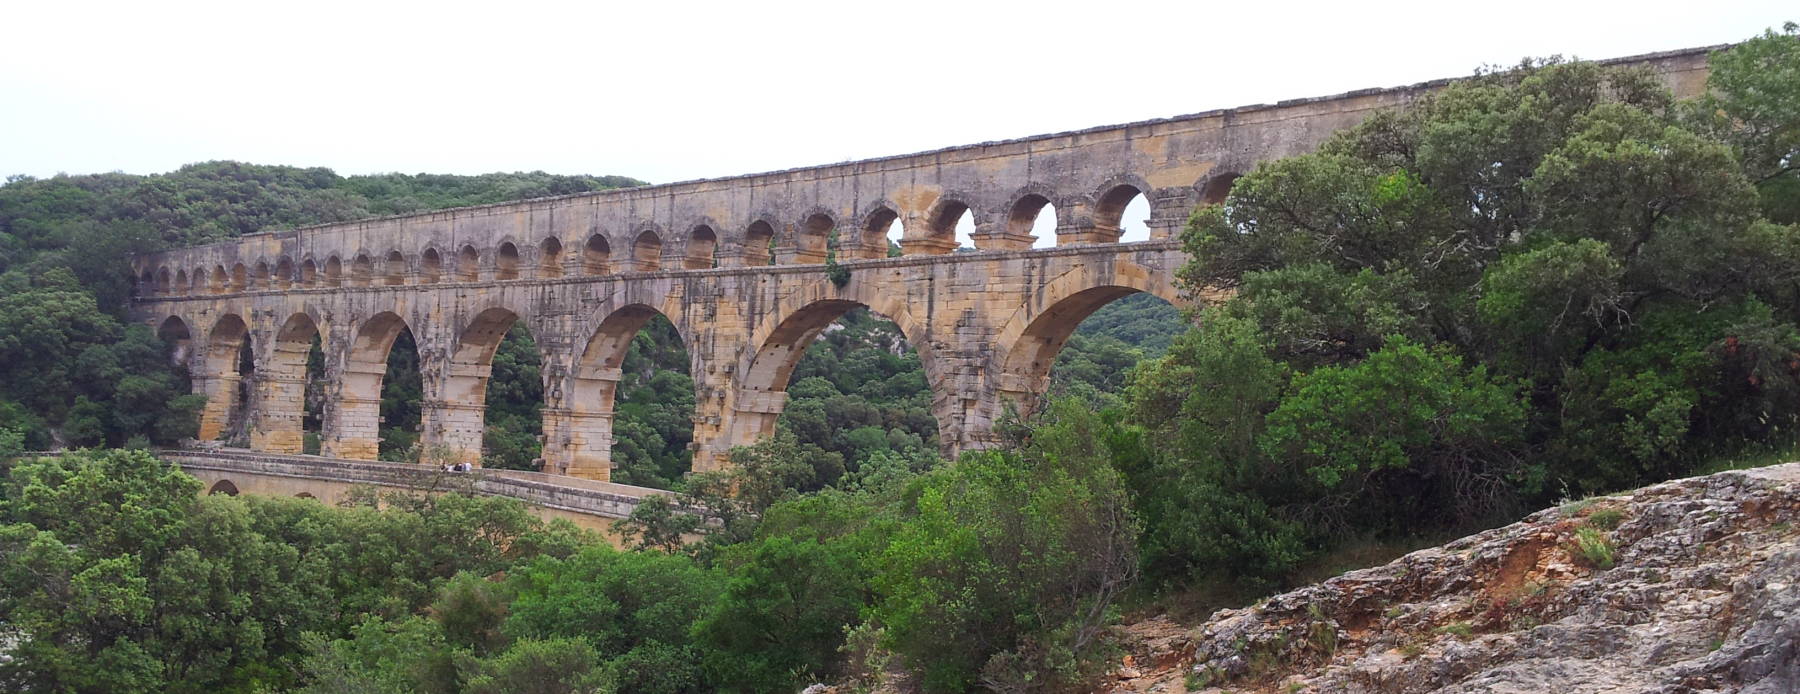 Pont du Gard, a Roman aqueduct bridge near Avignon.